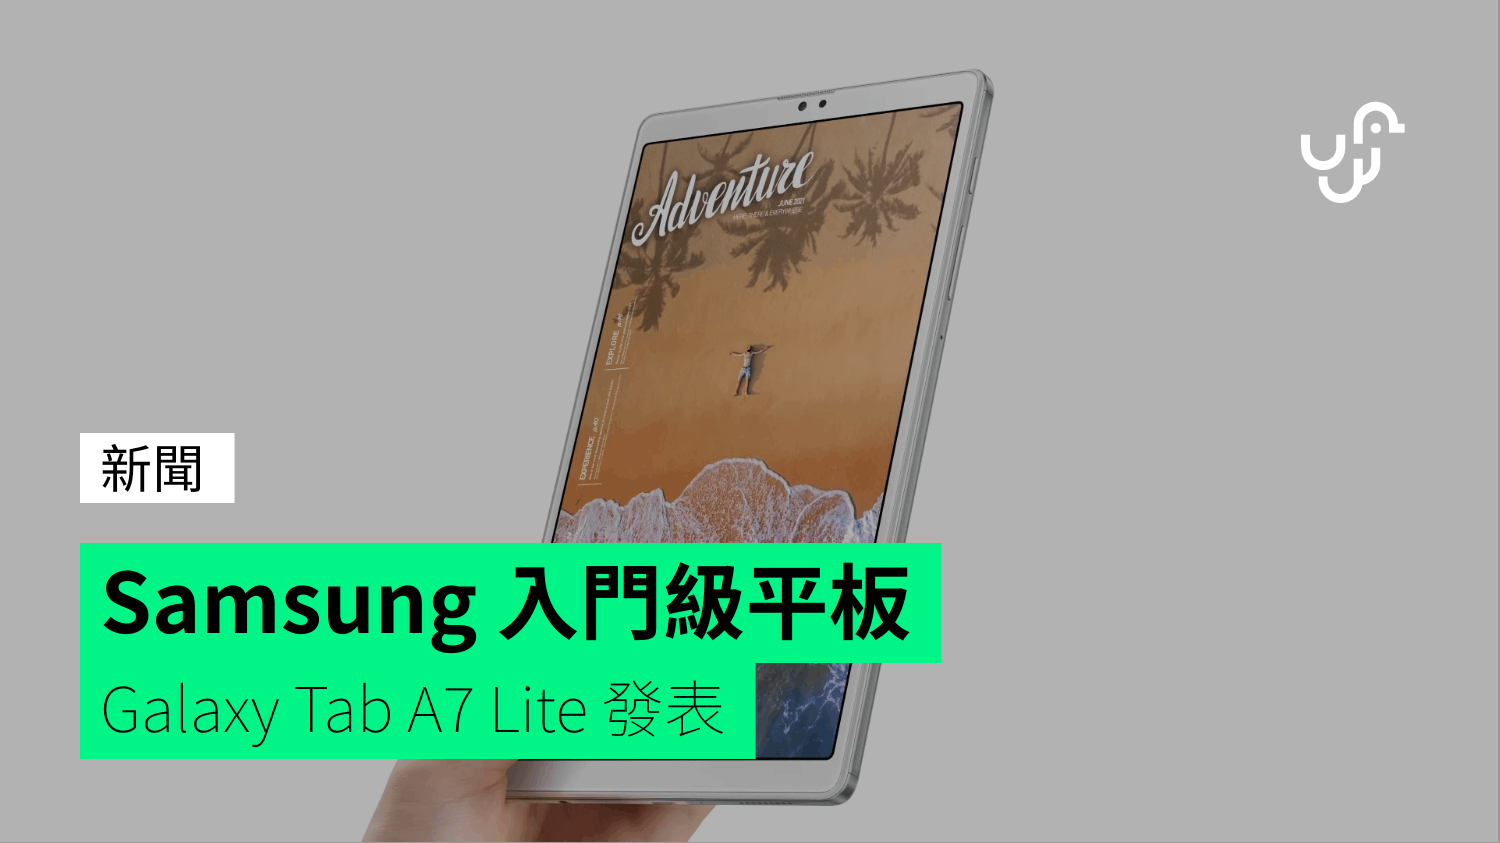 Samsung 入門級平板 Galaxy Tab A7 Lite 發表 - 香港 unwire.hk